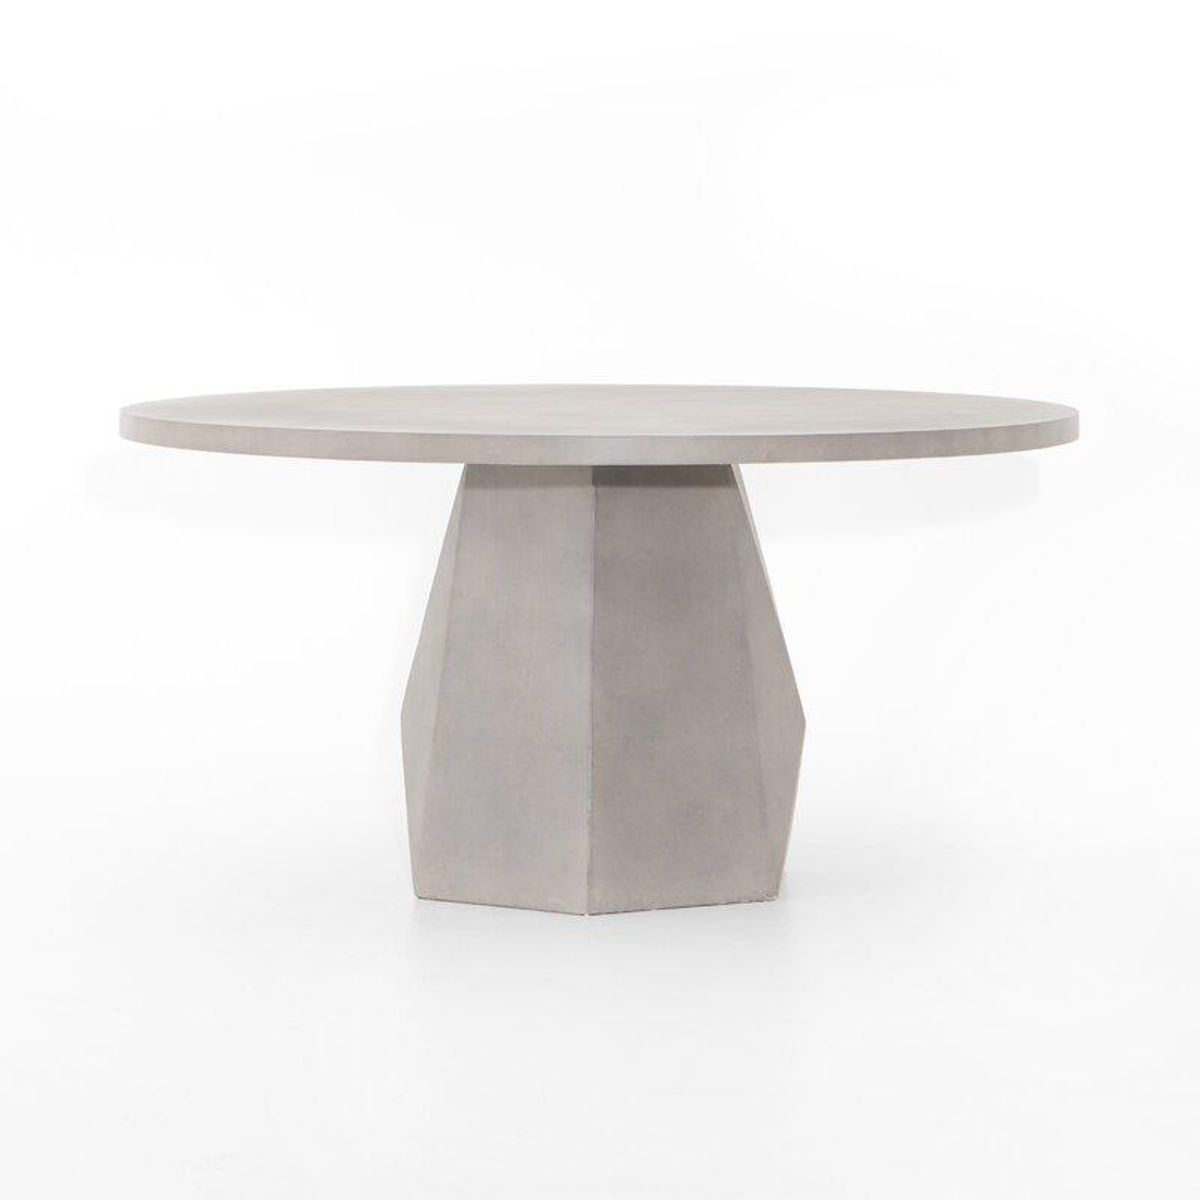 orren ellis mthimunye stone dining table